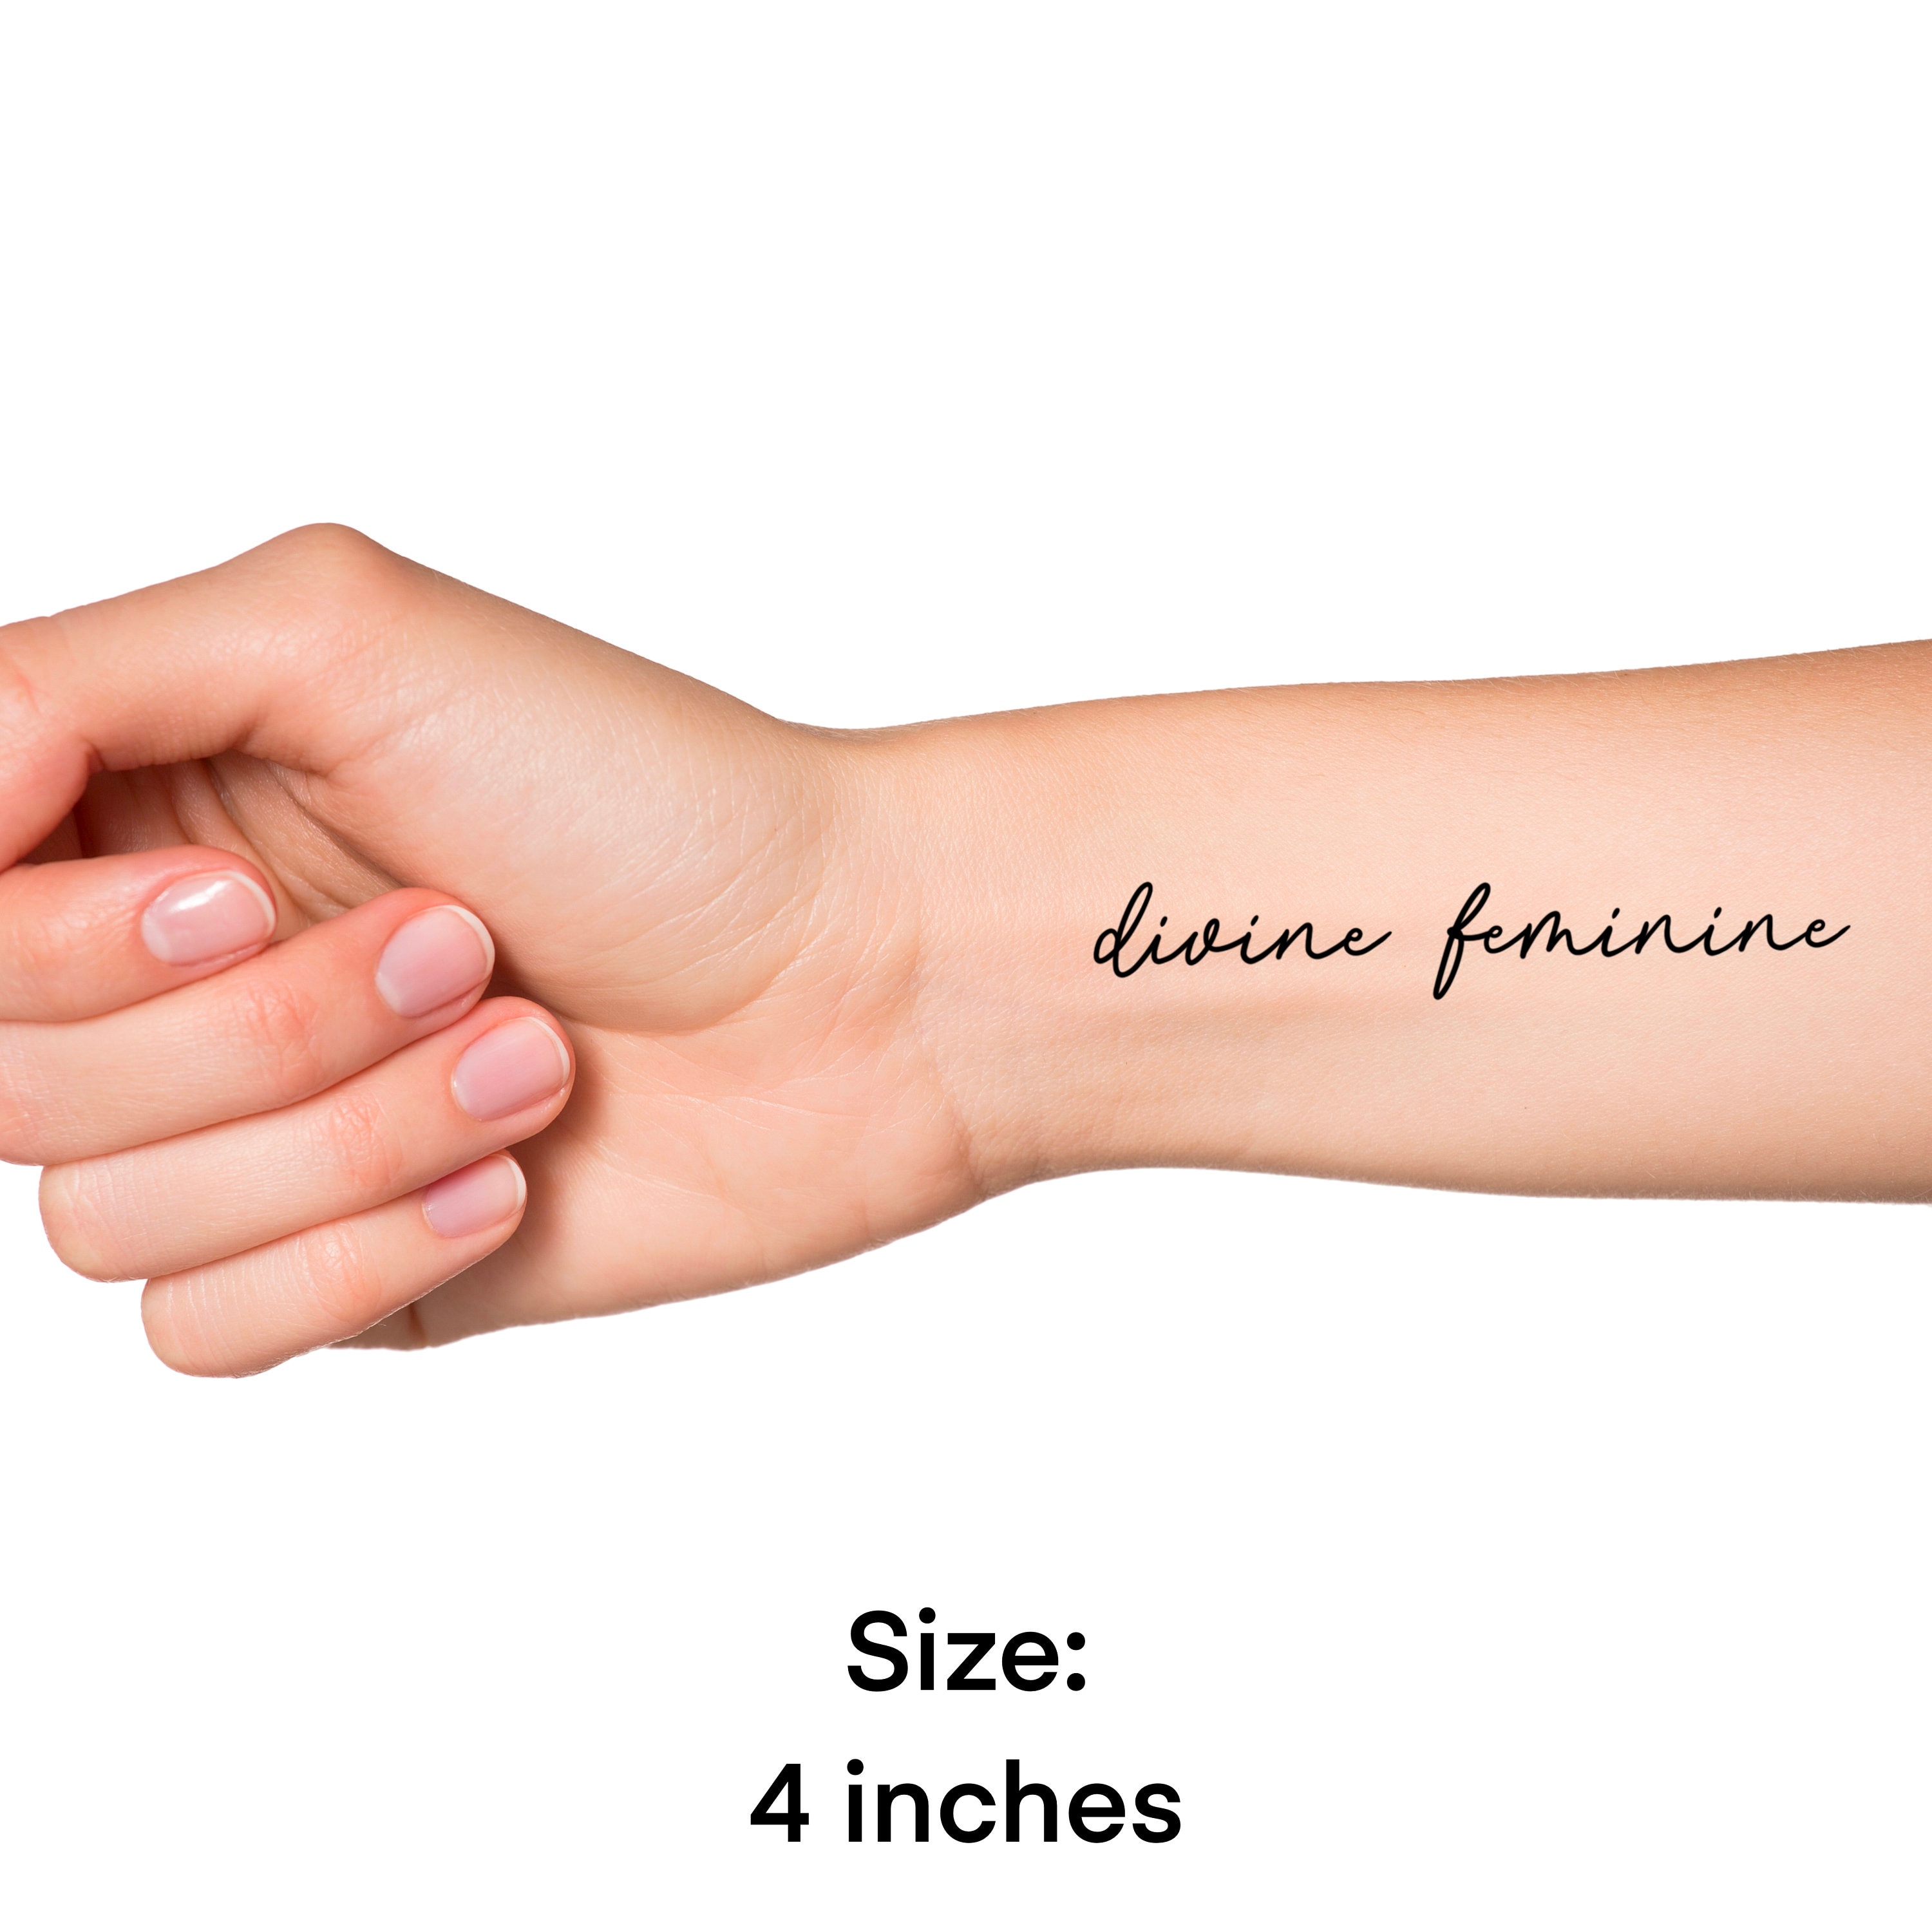 divine feminine tattoo legTikTok Search